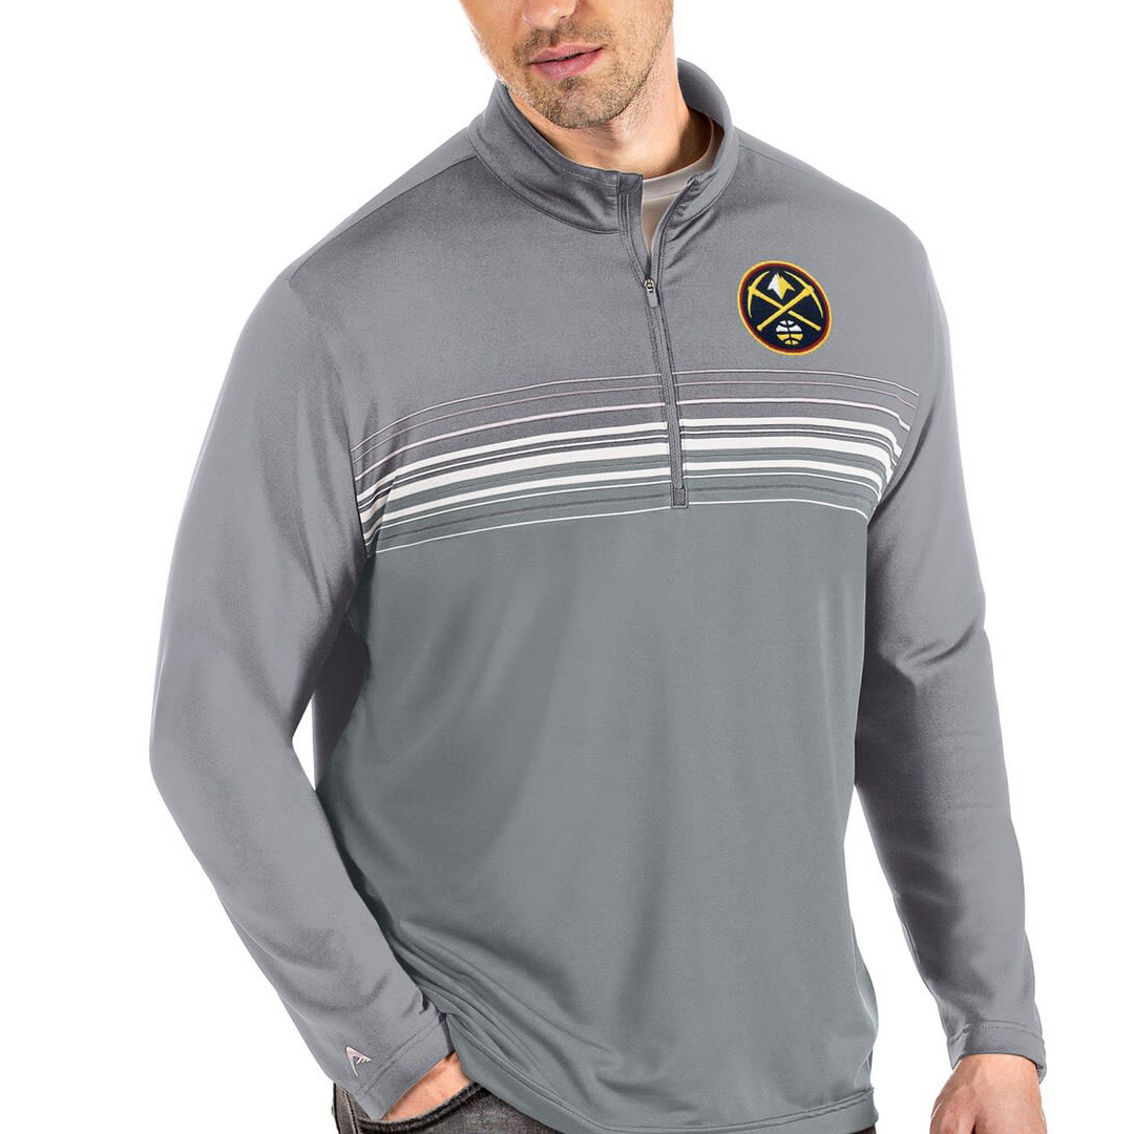 Antigua Men's Gray/Gray Denver Nuggets Pace Quarter-Zip Pullover Jacket - Image 2 of 2